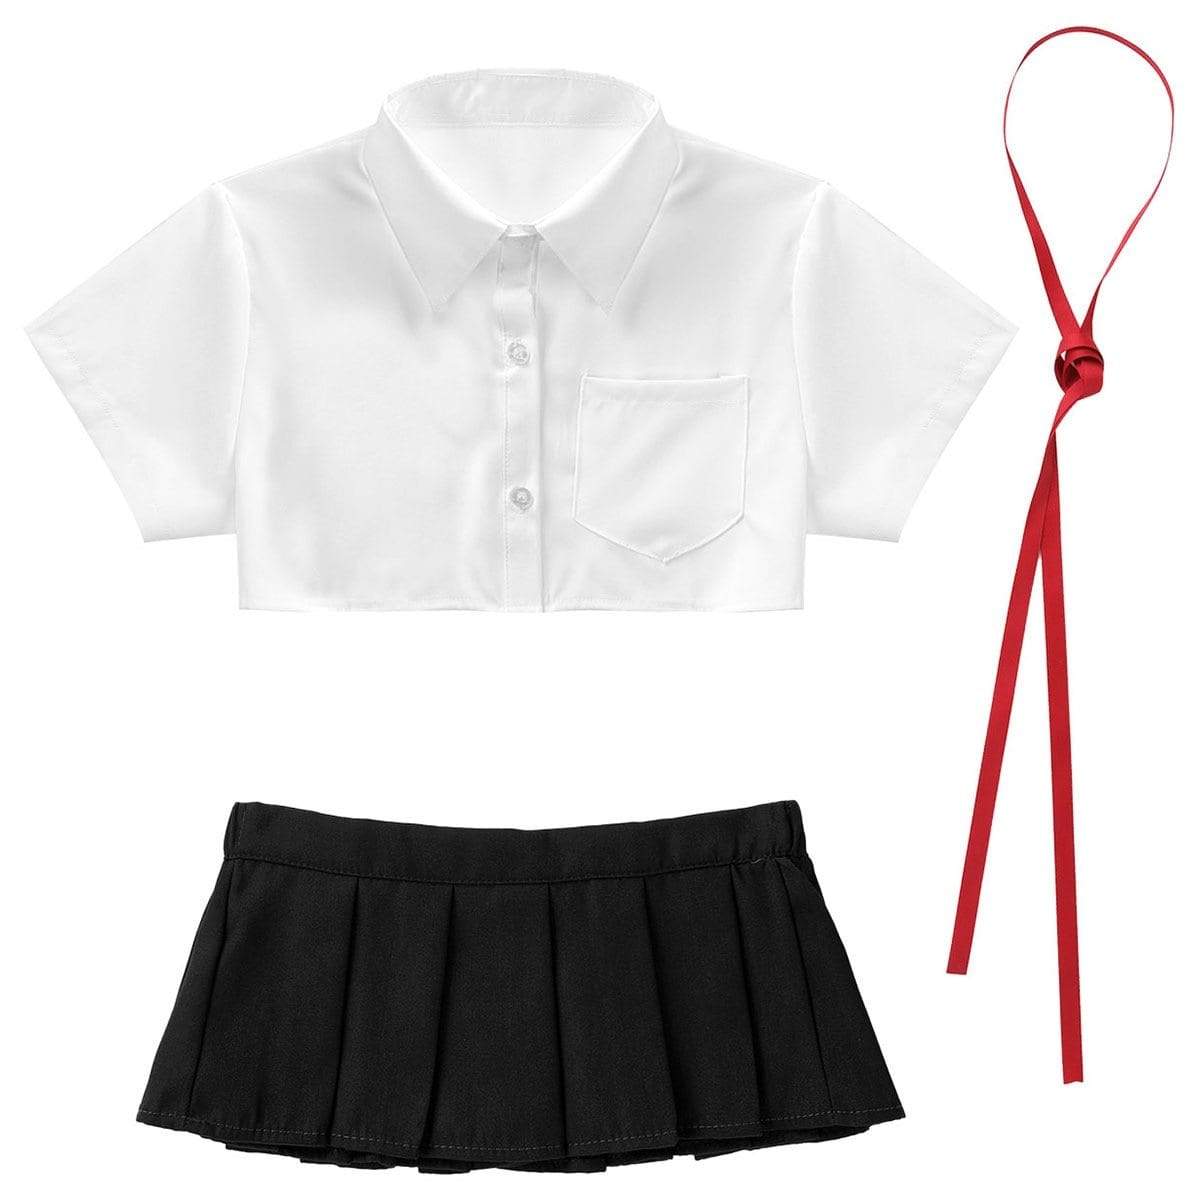 Kinky Cloth 200003986 White Black / S School Girl Super Crop Top Uniform